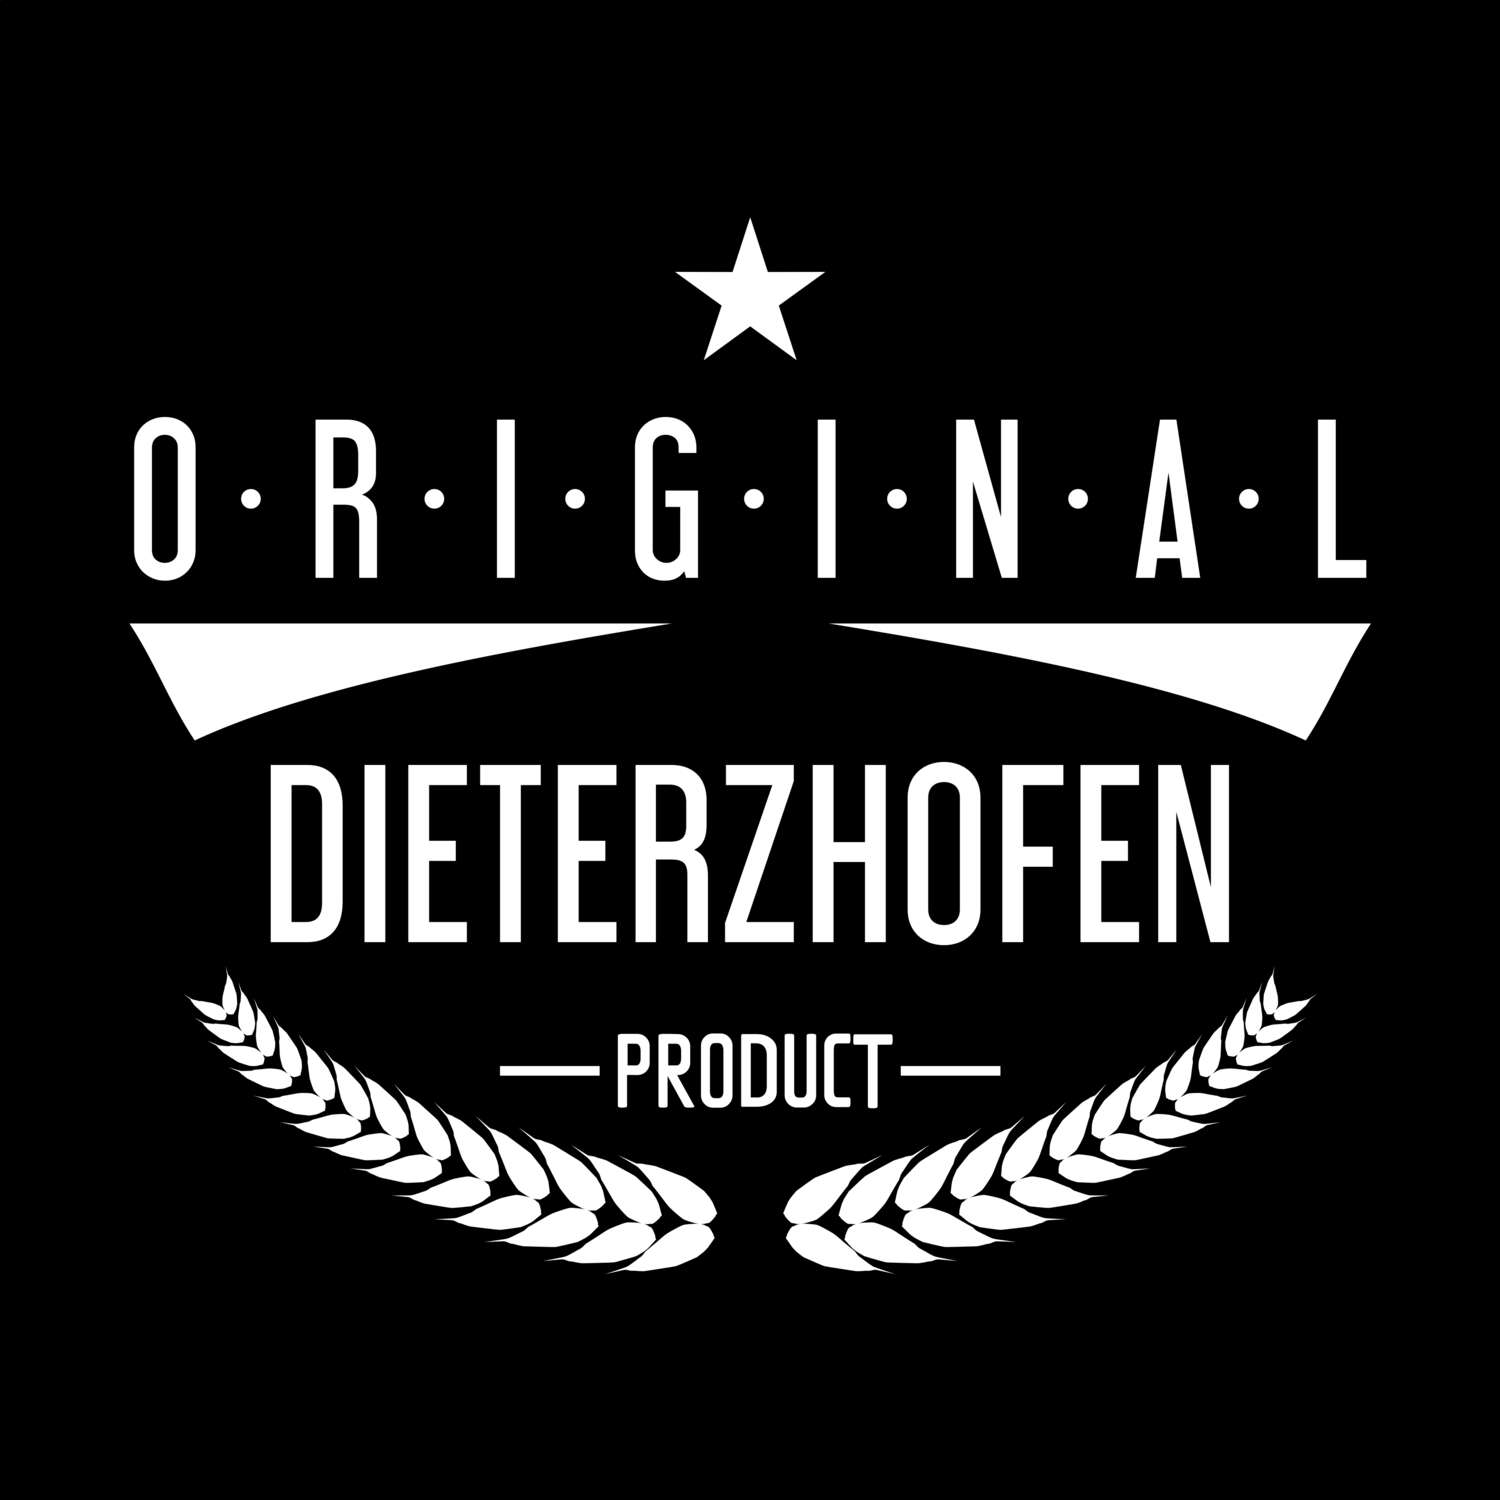 Dieterzhofen T-Shirt »Original Product«